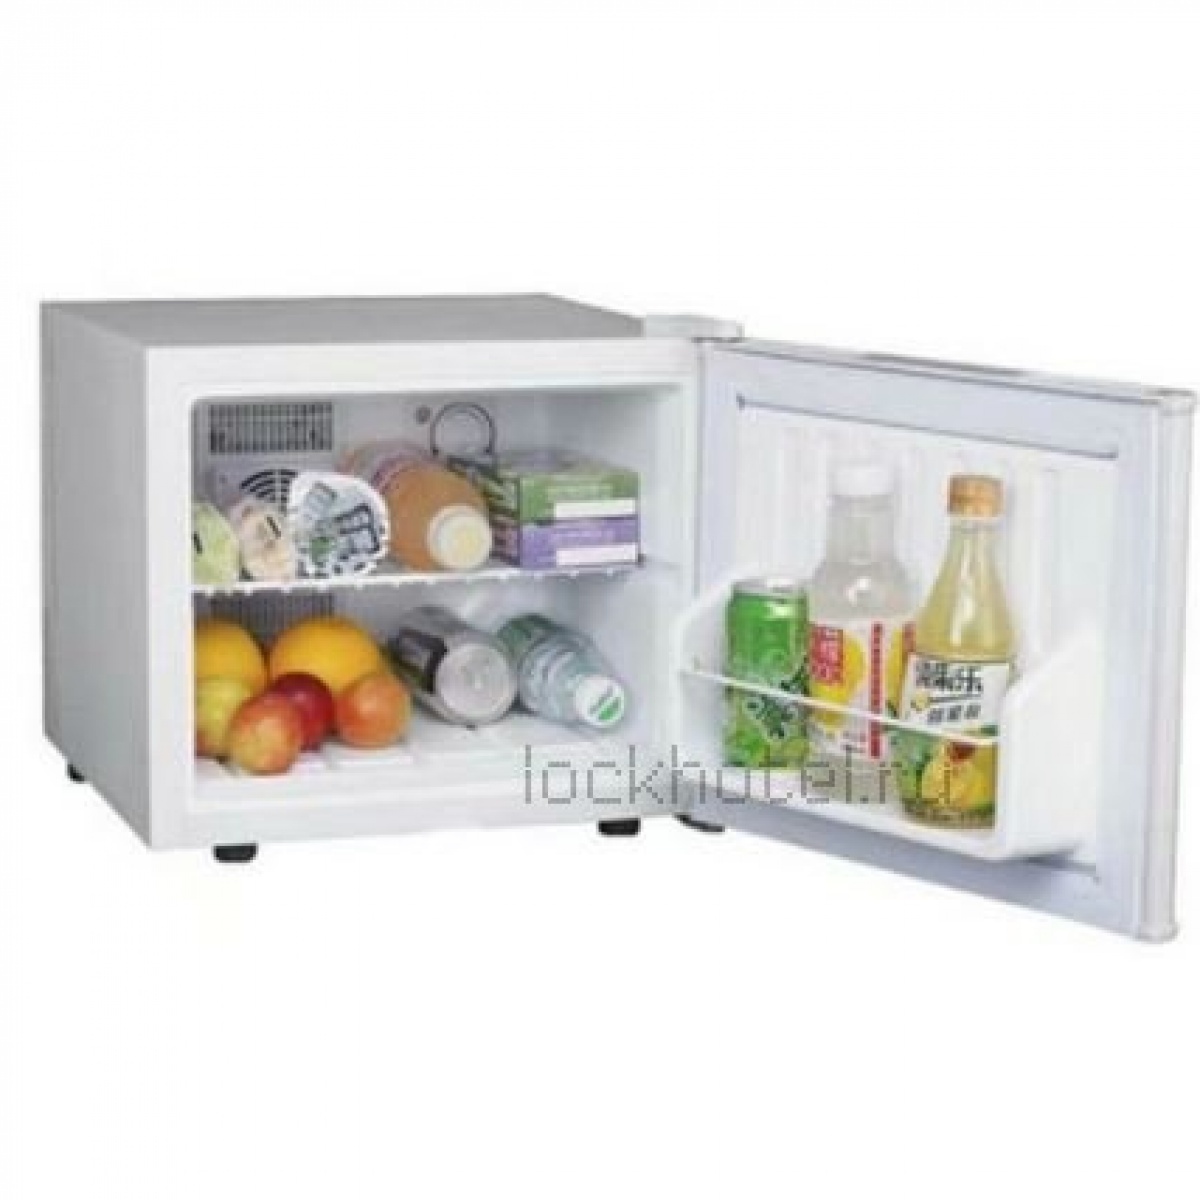 Купить маленький холодильник с морозильной камерой. Холодильник Bravo XR-50. Мини холодильник Атлант без компрессора. Nikai Mini 140l холодильник. Мини холодильник Whirlpool с морозилкой.